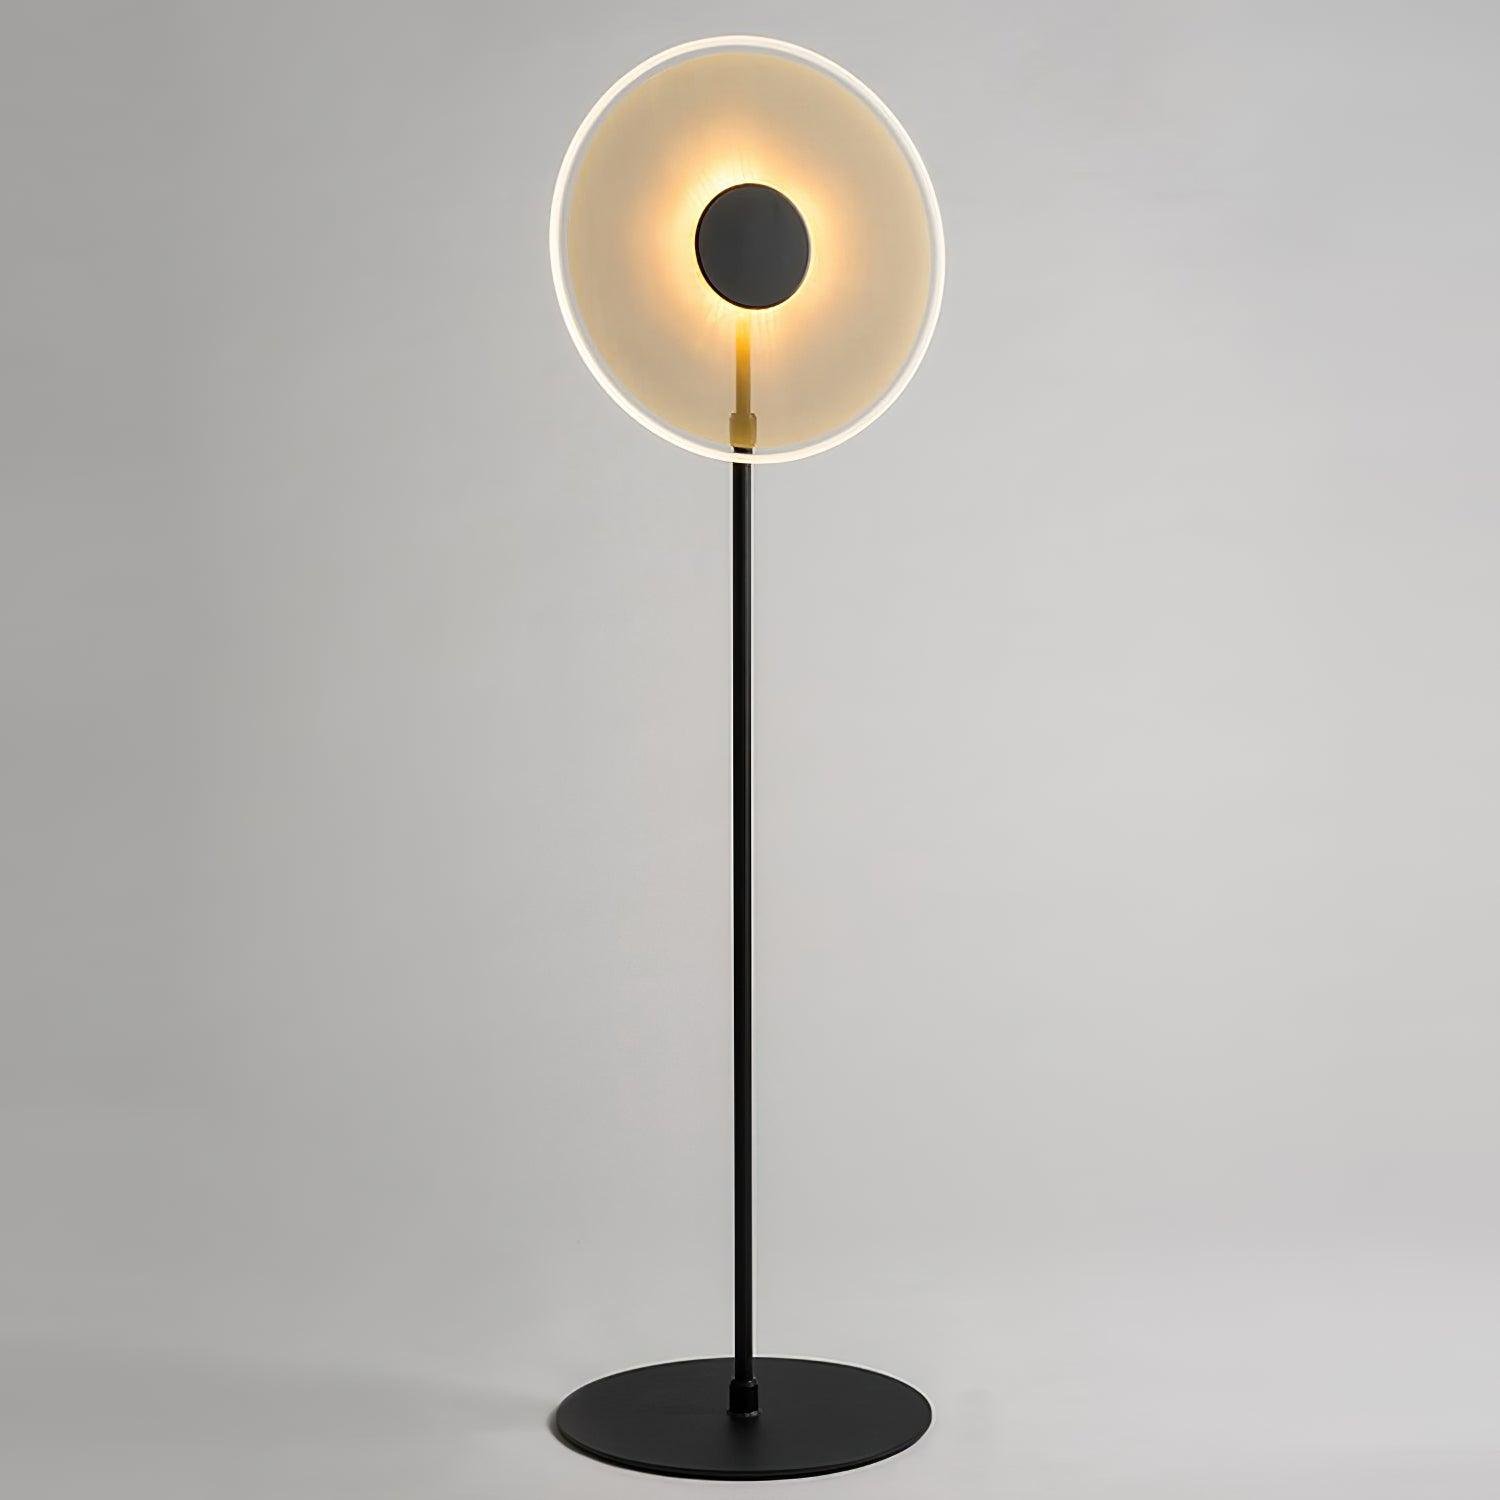 Black Blass Genesis Floor Lamp with EU Plug, Diameter 14.9 inches x Height 59 inches (Diameter 38cm x Height 150cm)